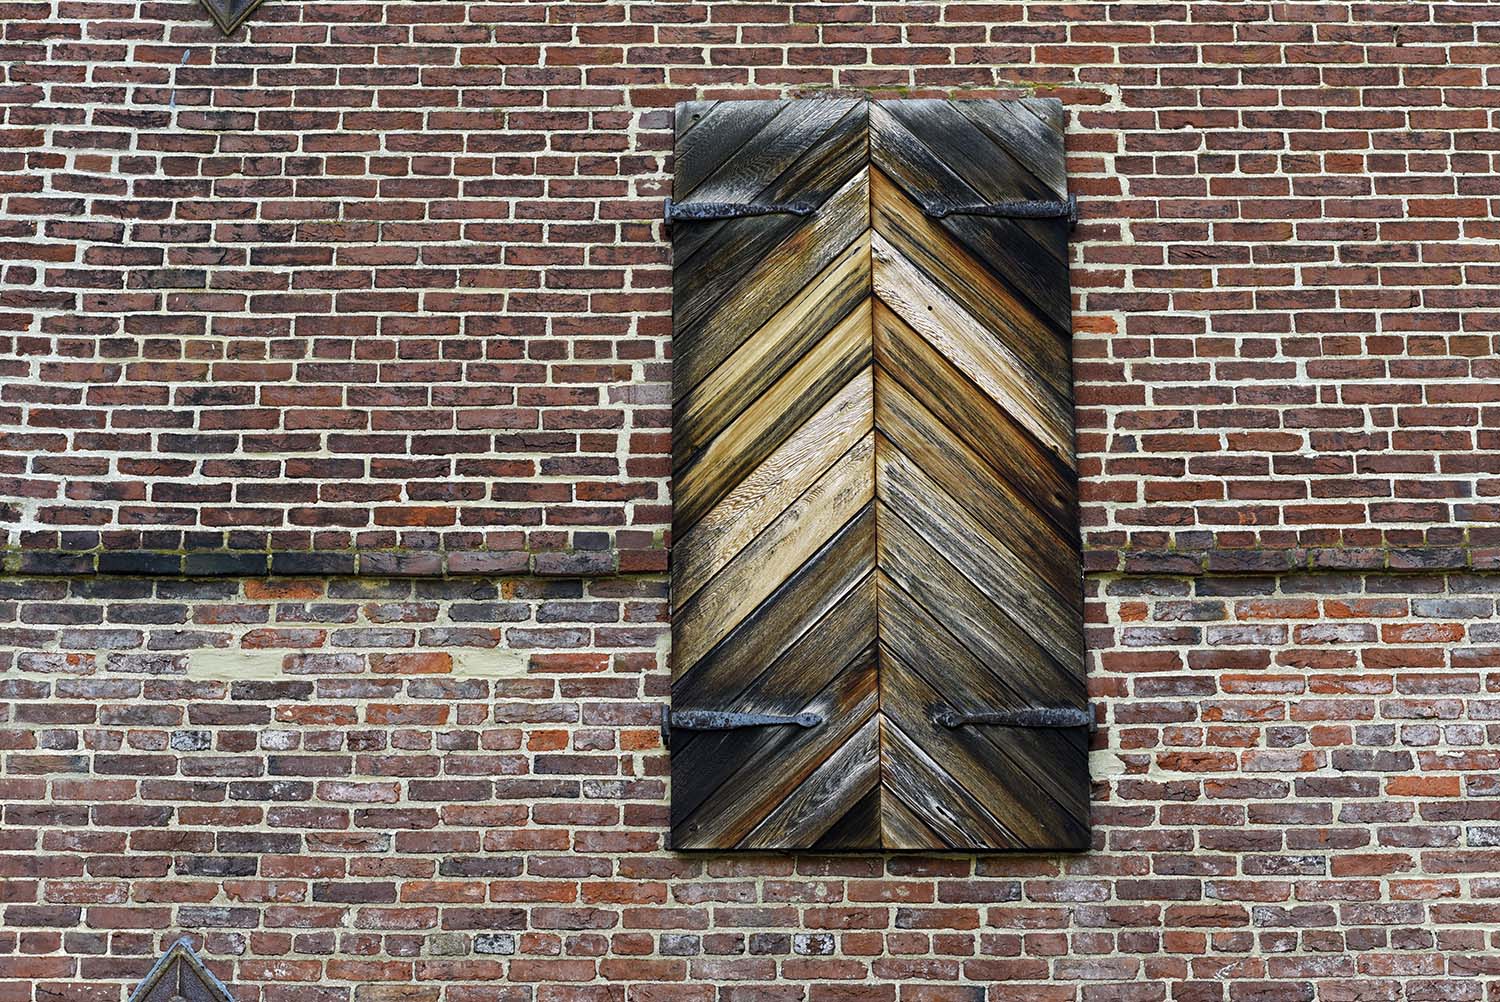 Door_Wooden_Design_Brick_Wall_Brandywine_River_Museum_of_Art_Chadds_Ford_Pennsylvania.jpg